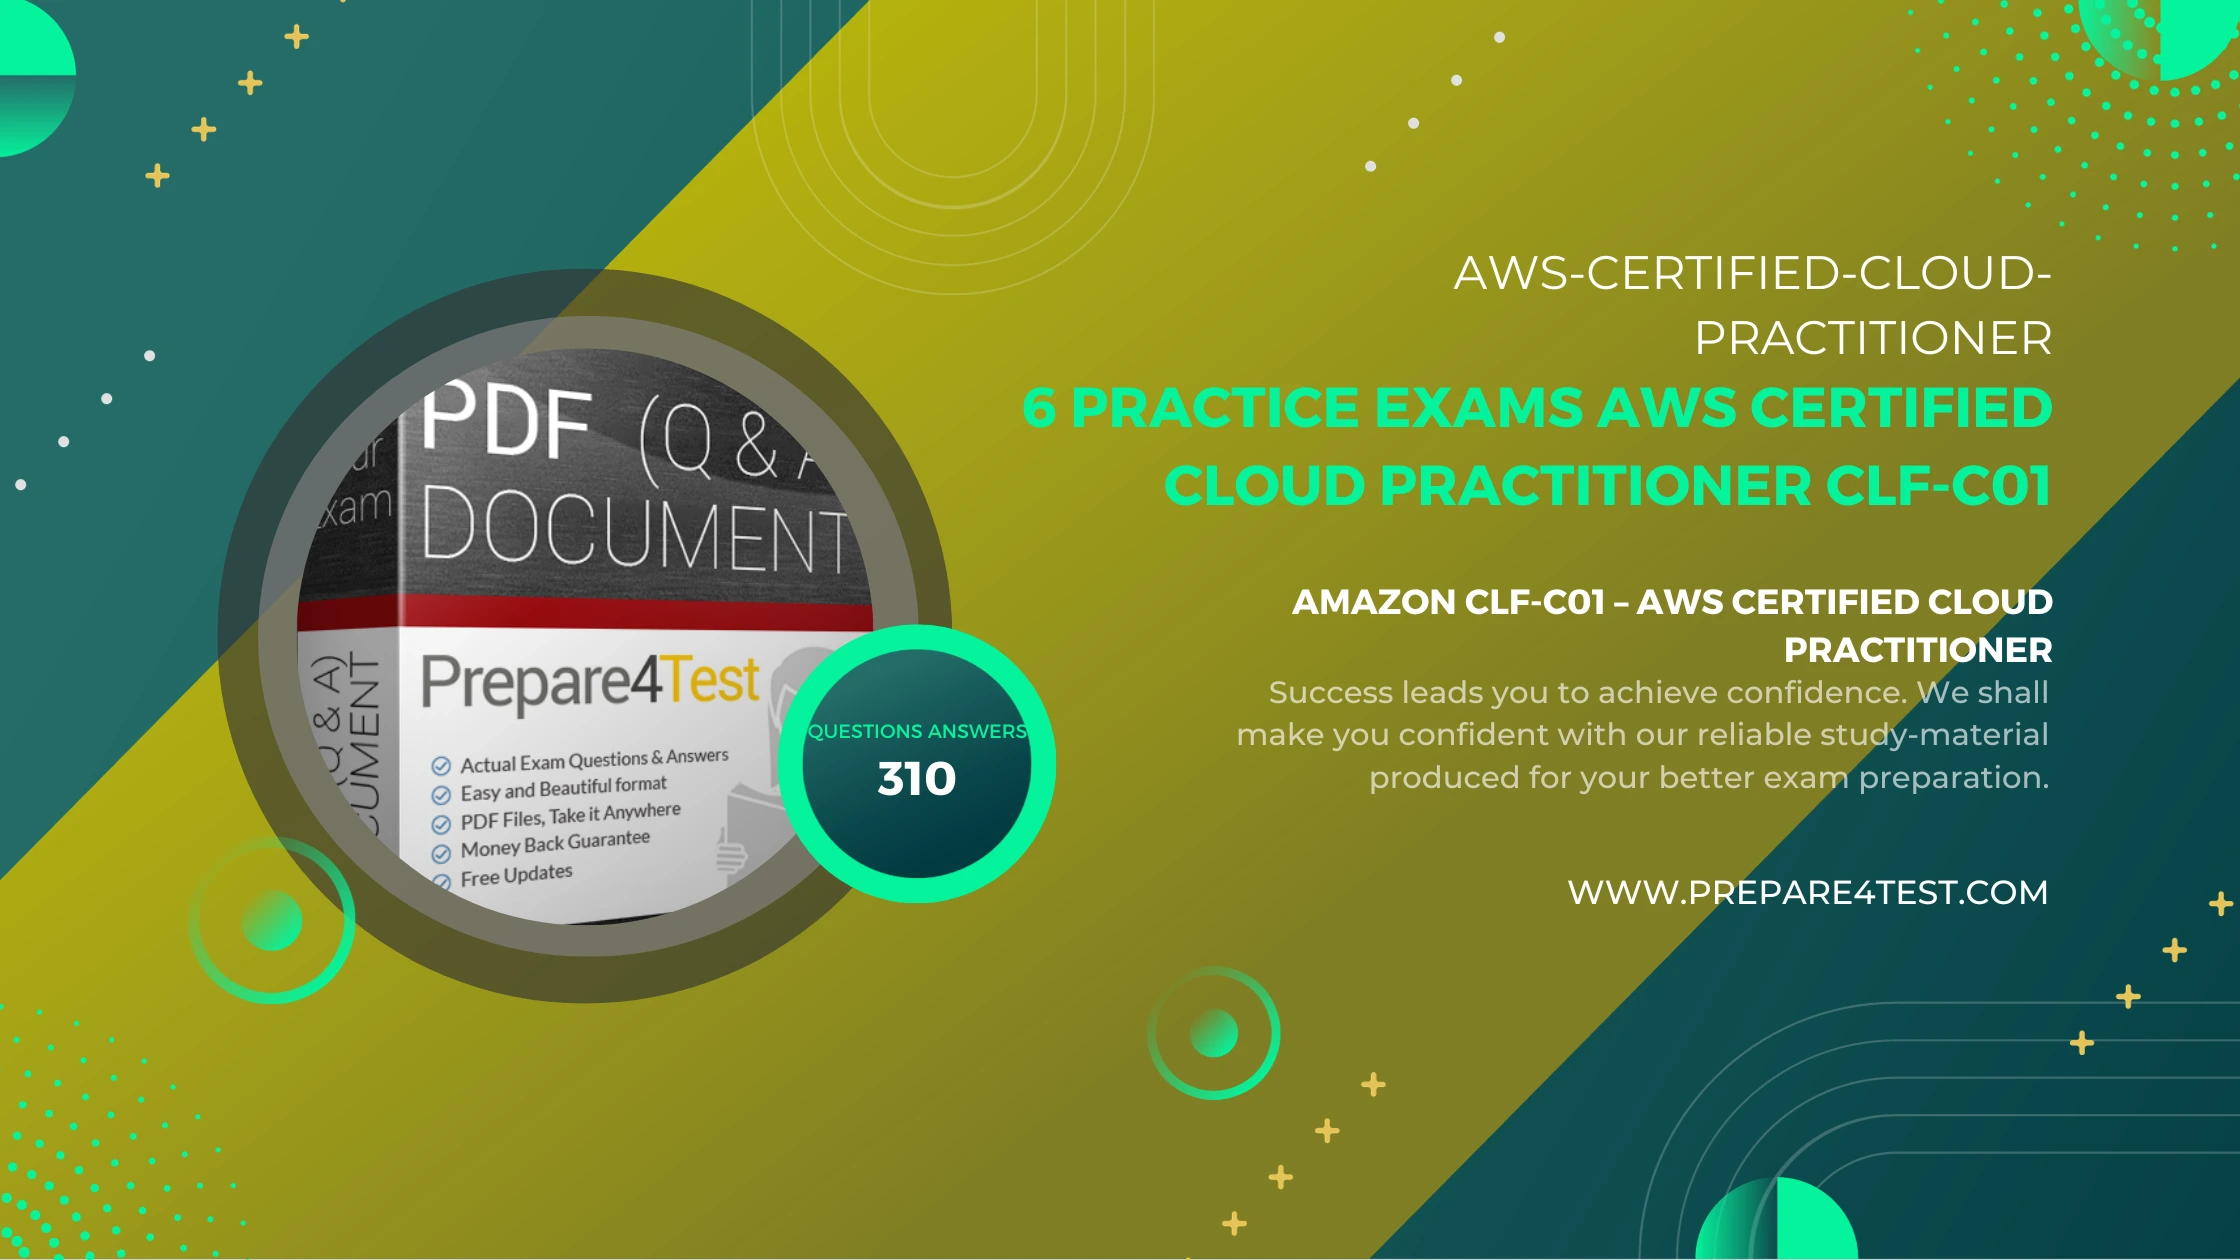 6 Practice Exams AWS Certified Cloud Practitioner CLF-C01 guarantee